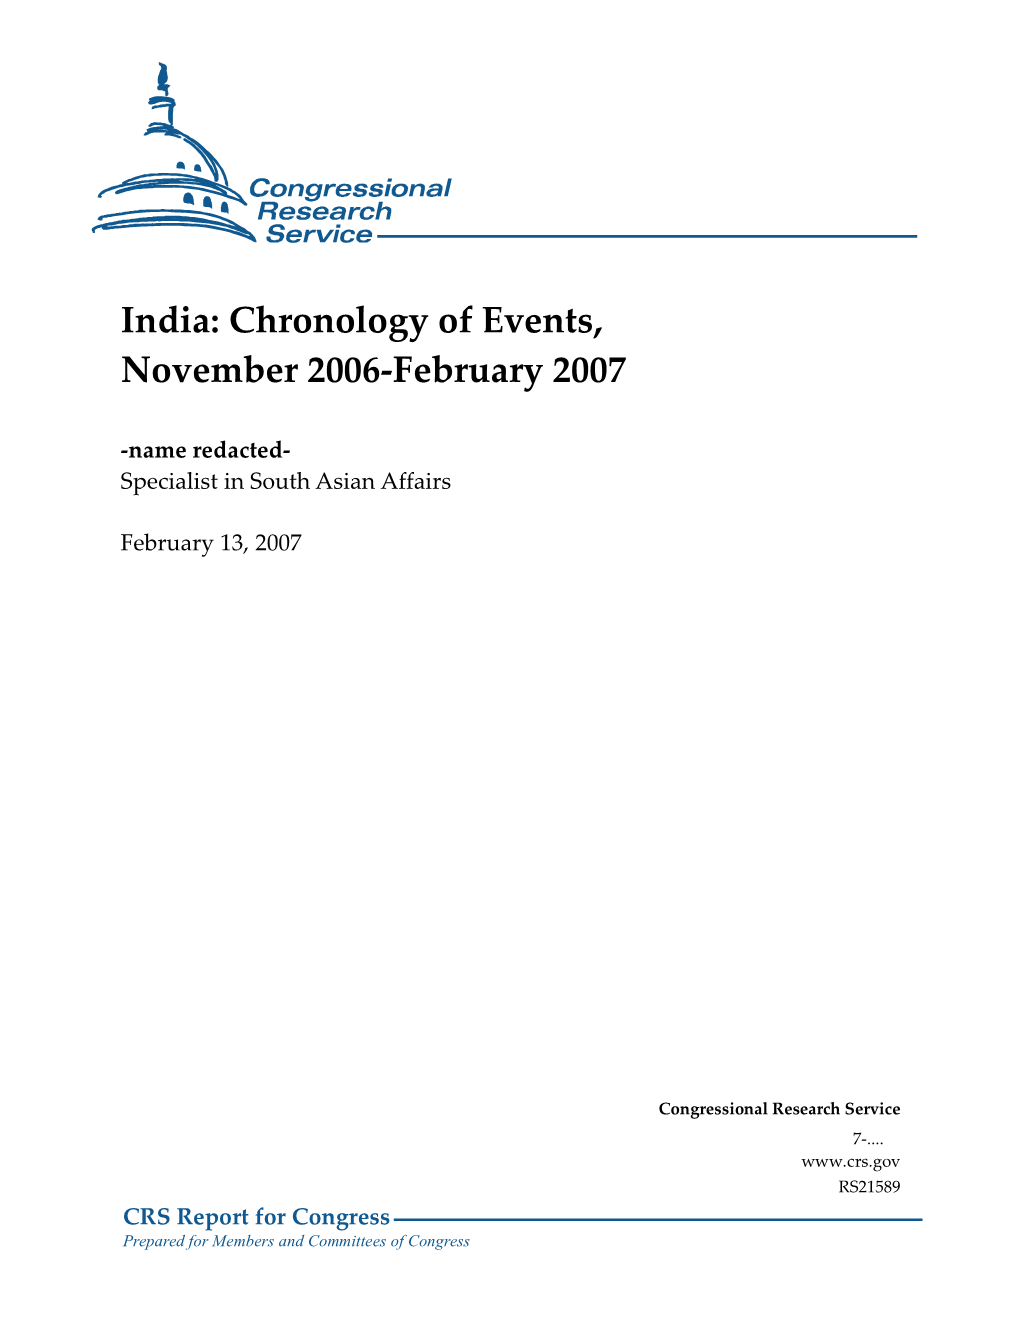 Chronology of Events, November 2006-February 2007